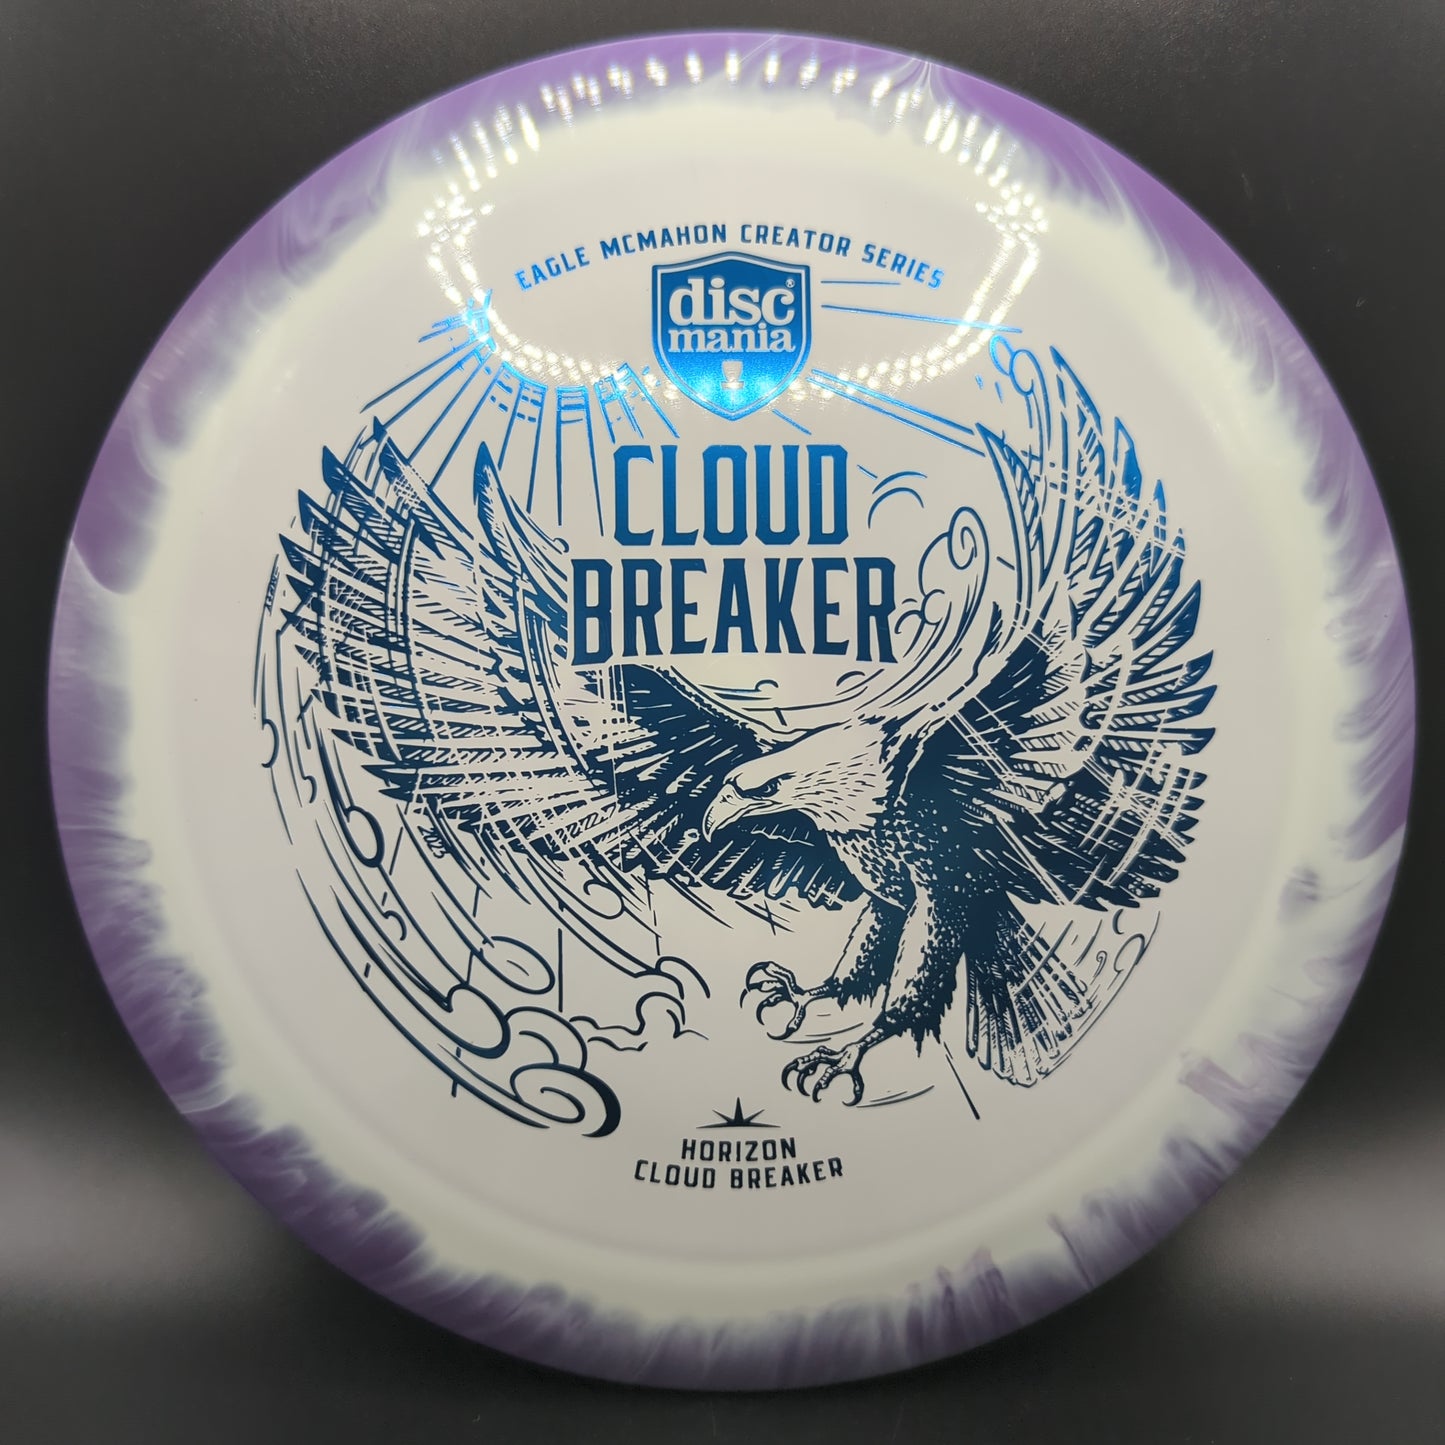 Discmania Eagle McMahon Horizon Cloudbreaker